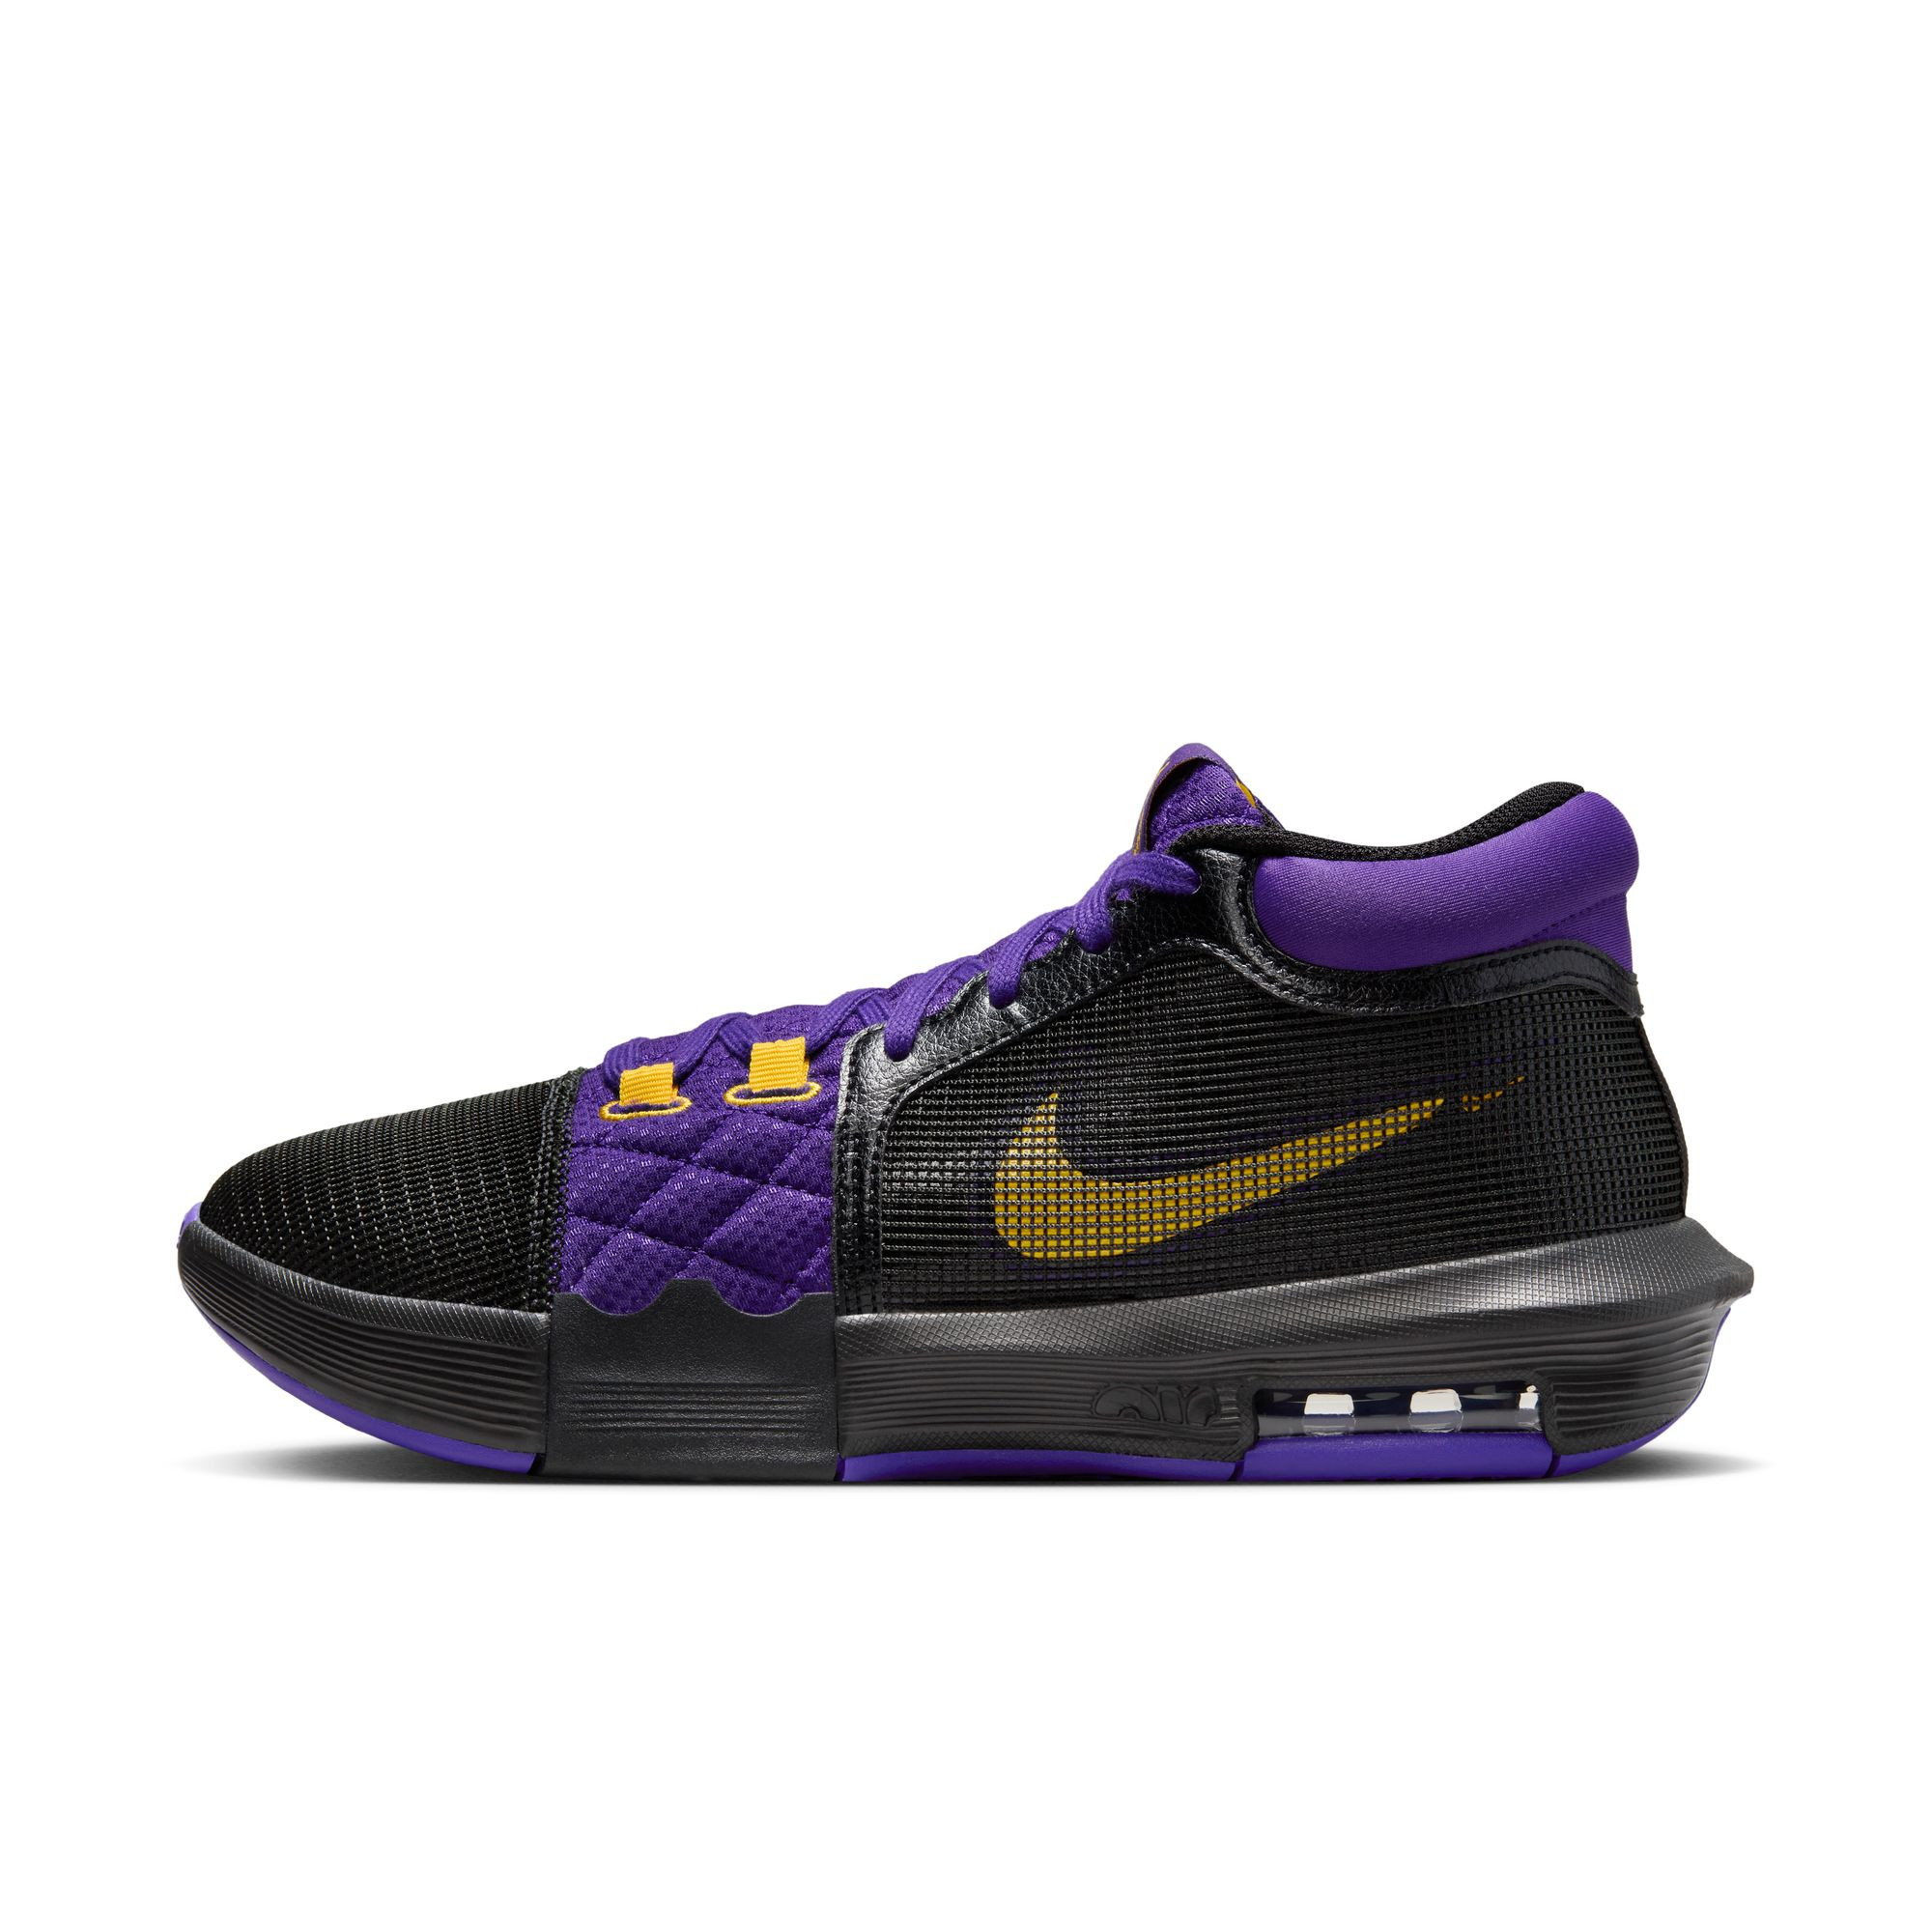 Chaussures Nike Lebron Witness VIII - Black/University Gold-Field Purple